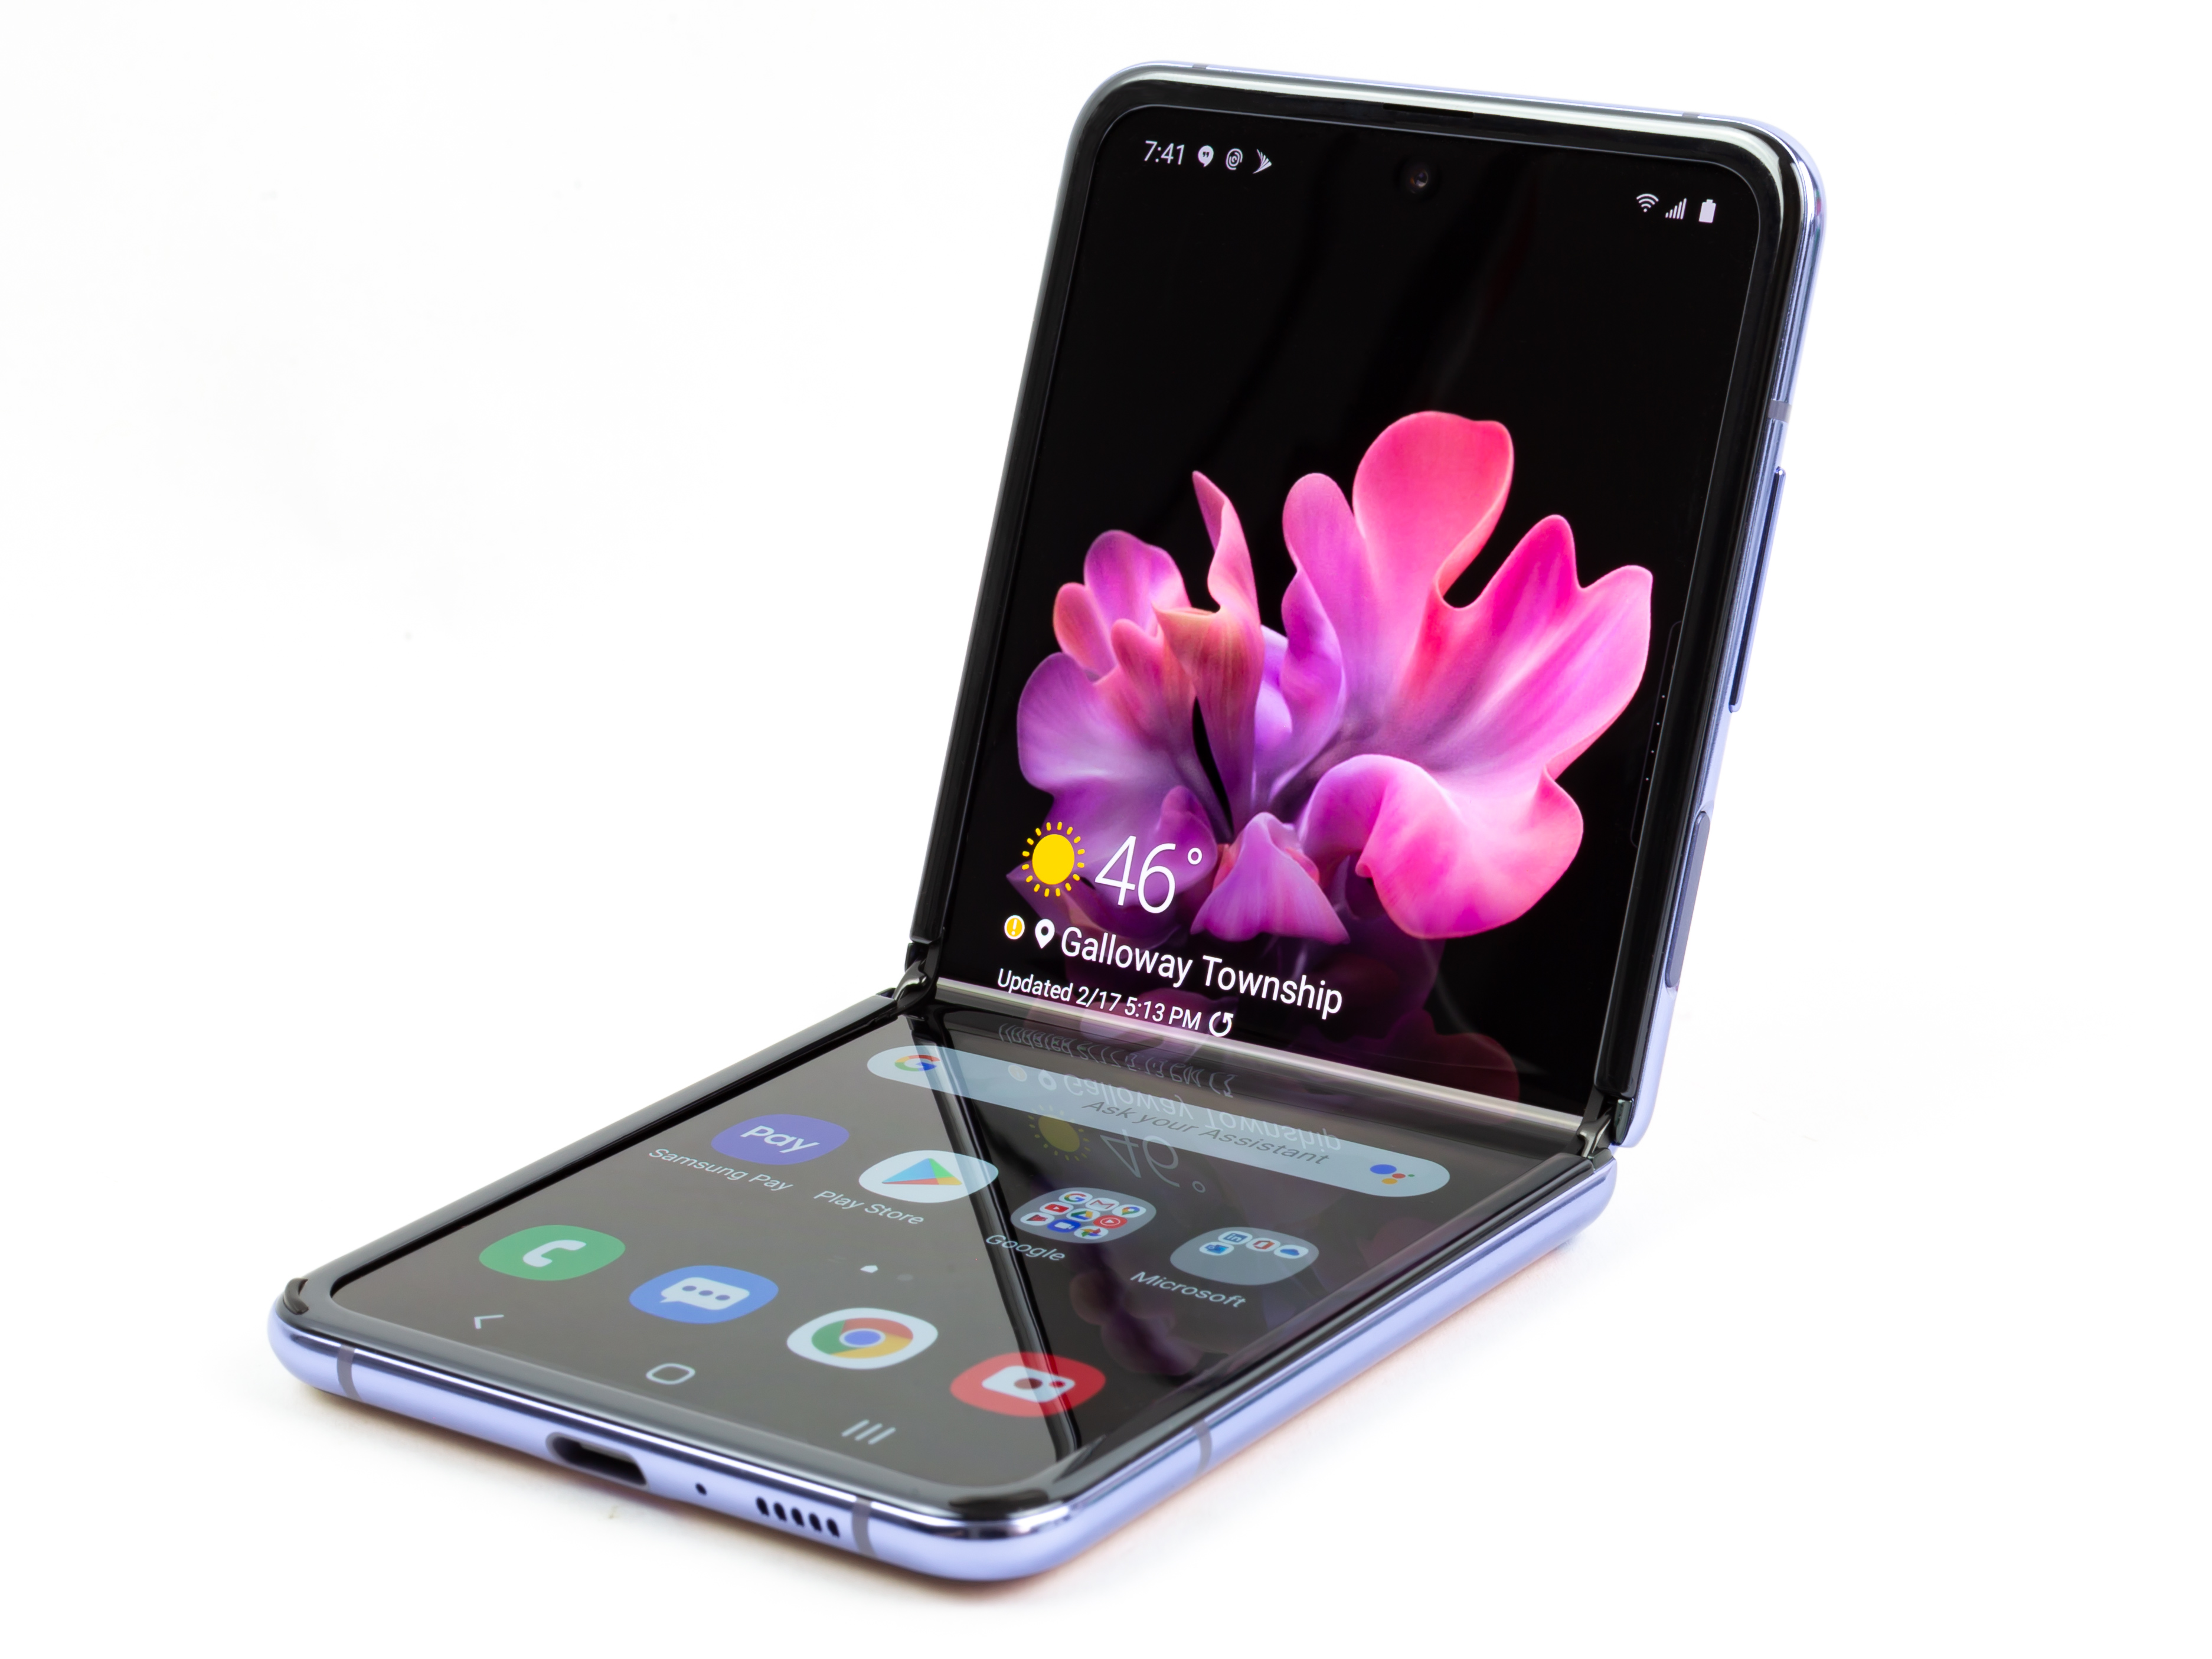 Samsung Galaxy Z Flip review—I think I hate flip phones